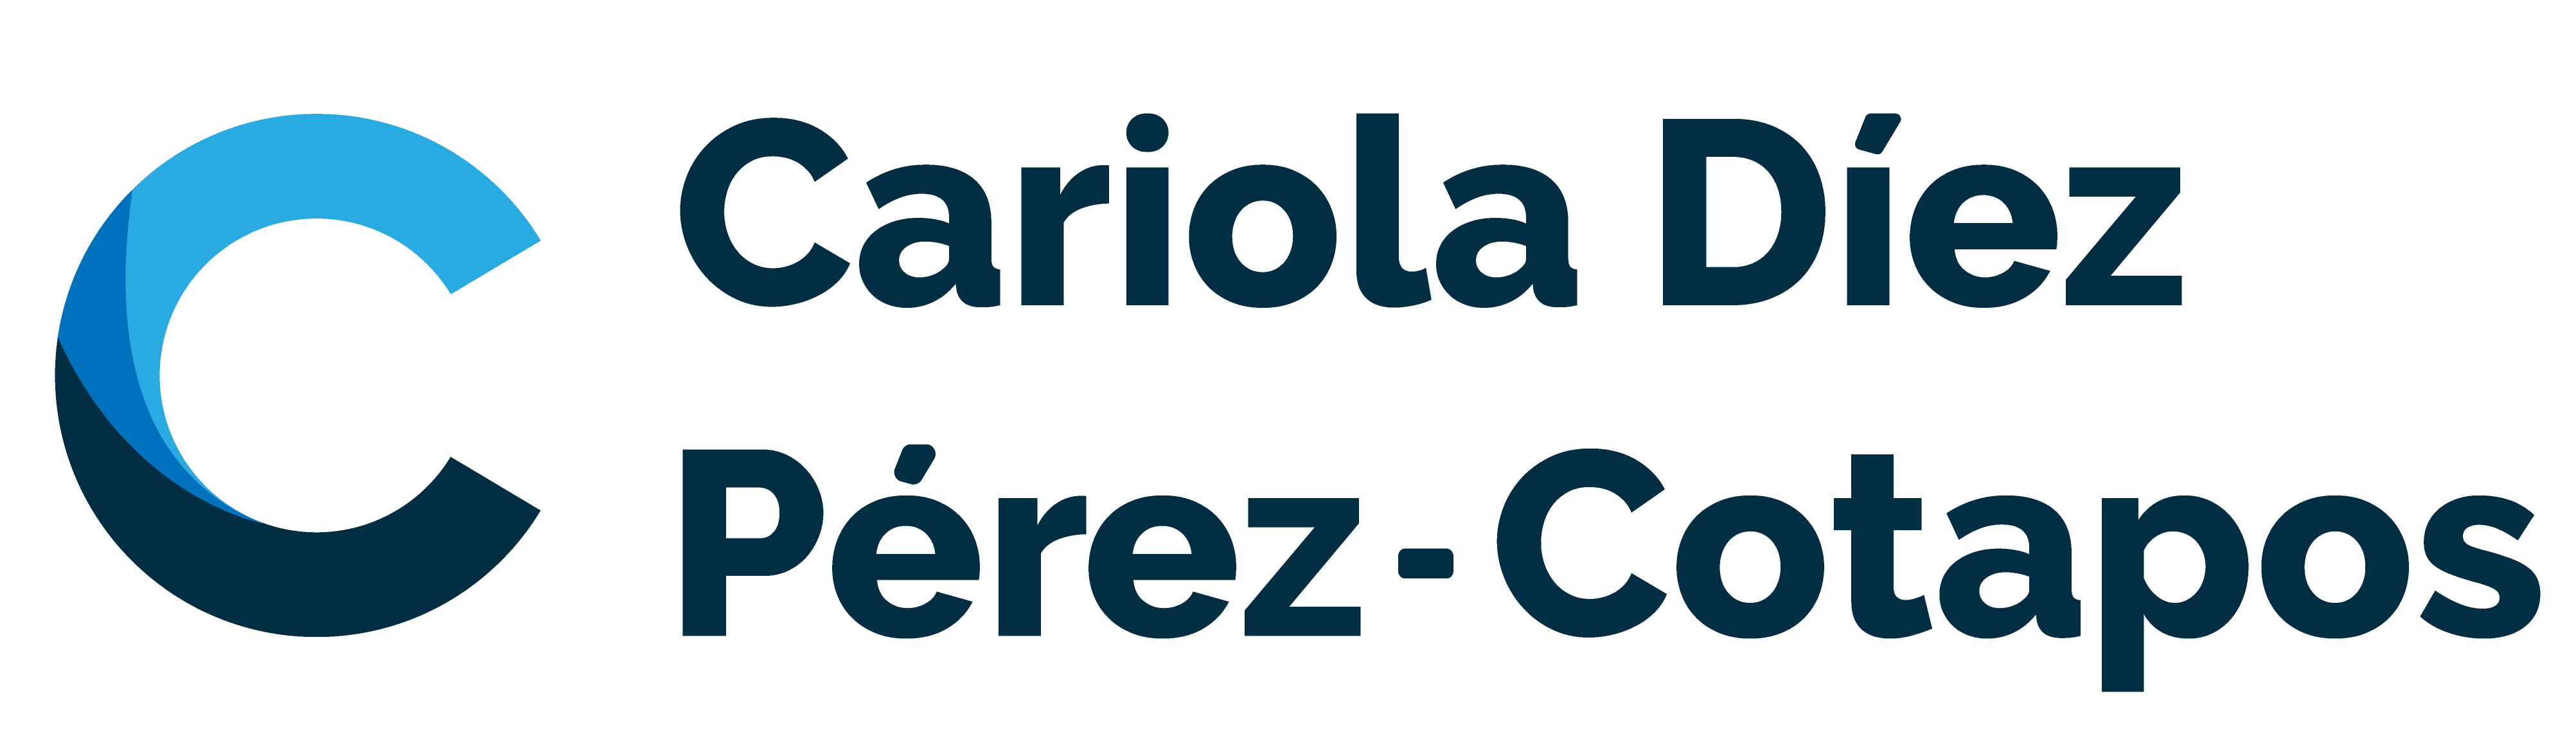 Cariola Diez Perez-Cotapos